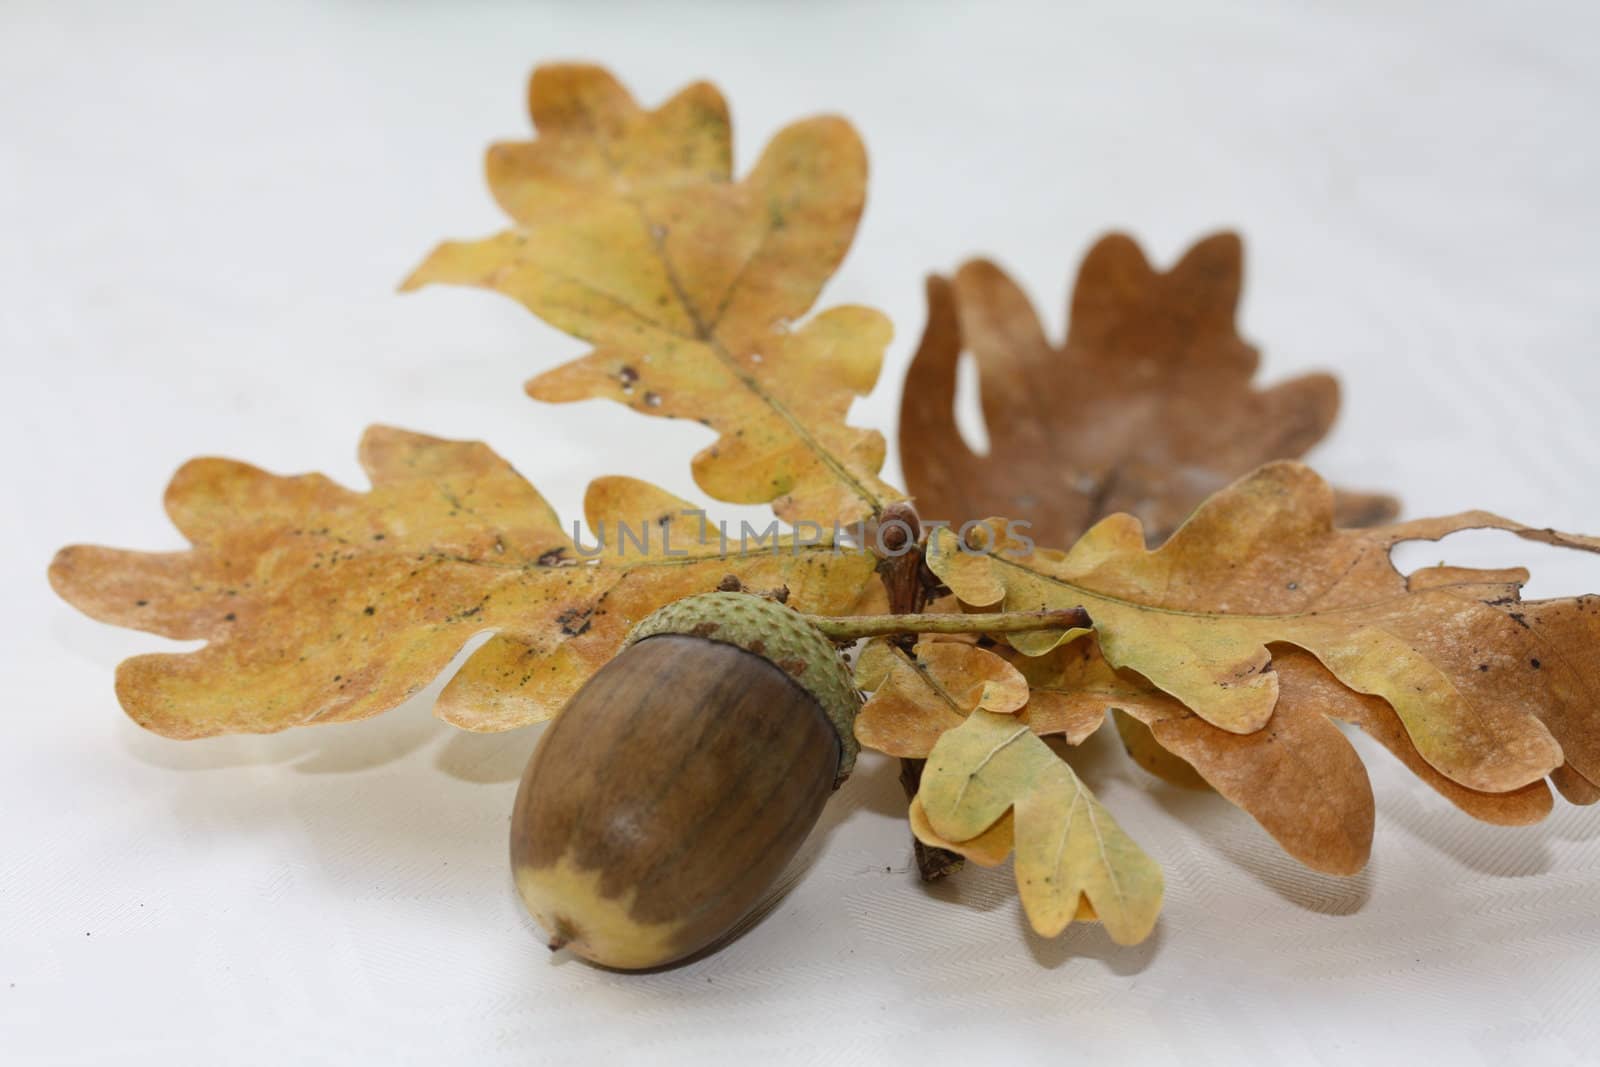 An acorn on oak leaves, autumn still life